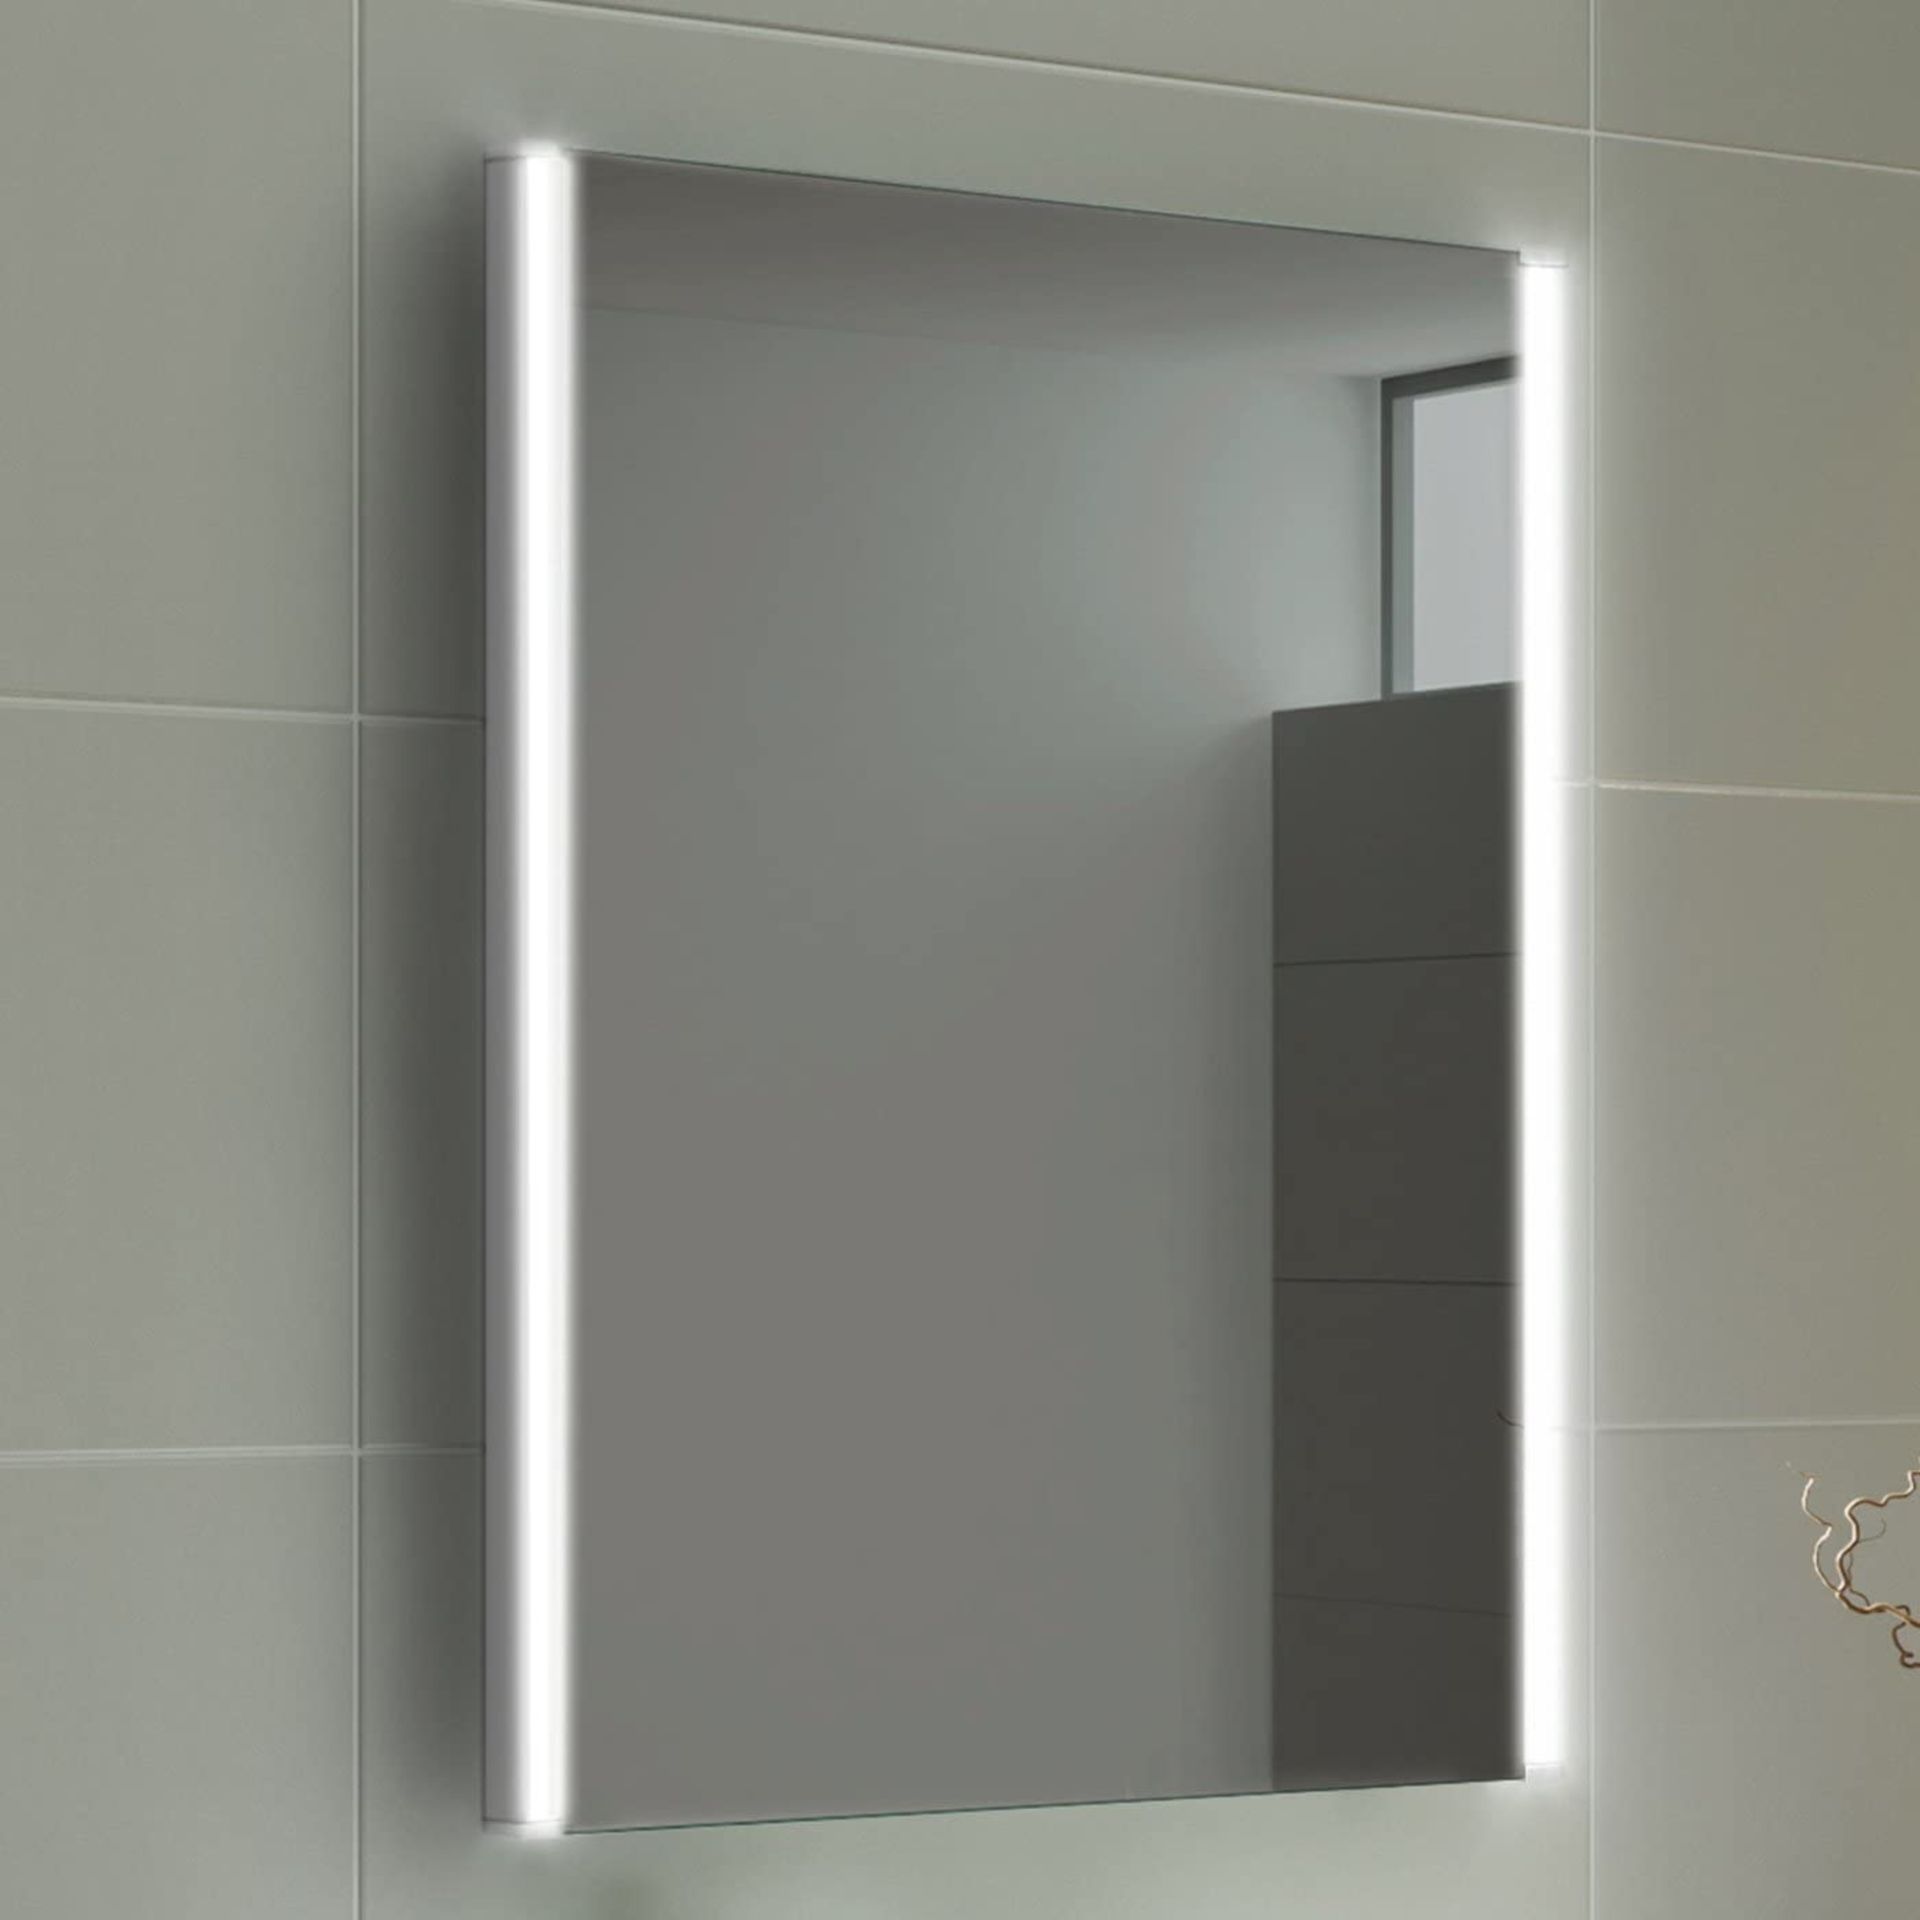 500x700mm Modern Illuminated Battery LED Light Bathroom Mirror.RRP £249.99.MC158 Ready to hang...